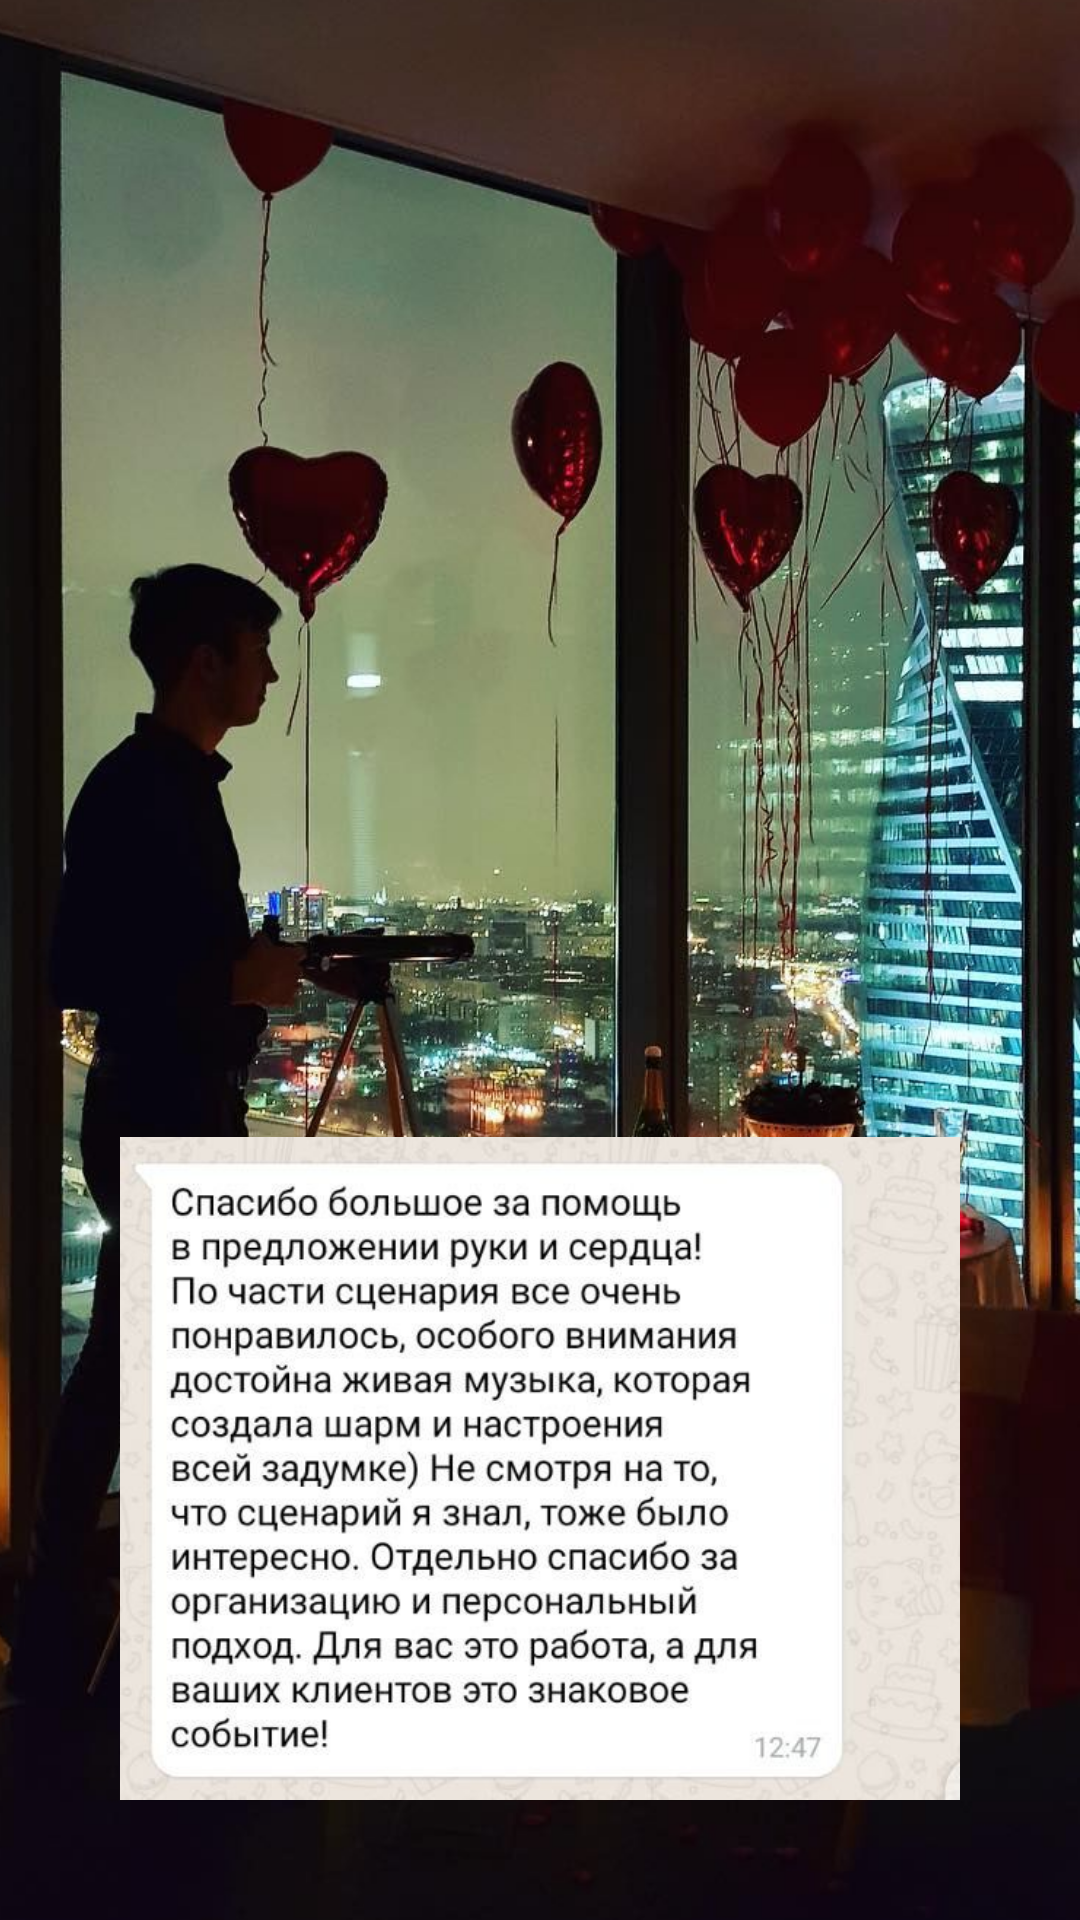 Организация предложения руки и сердца в Тольятти
от компании Pandaevent